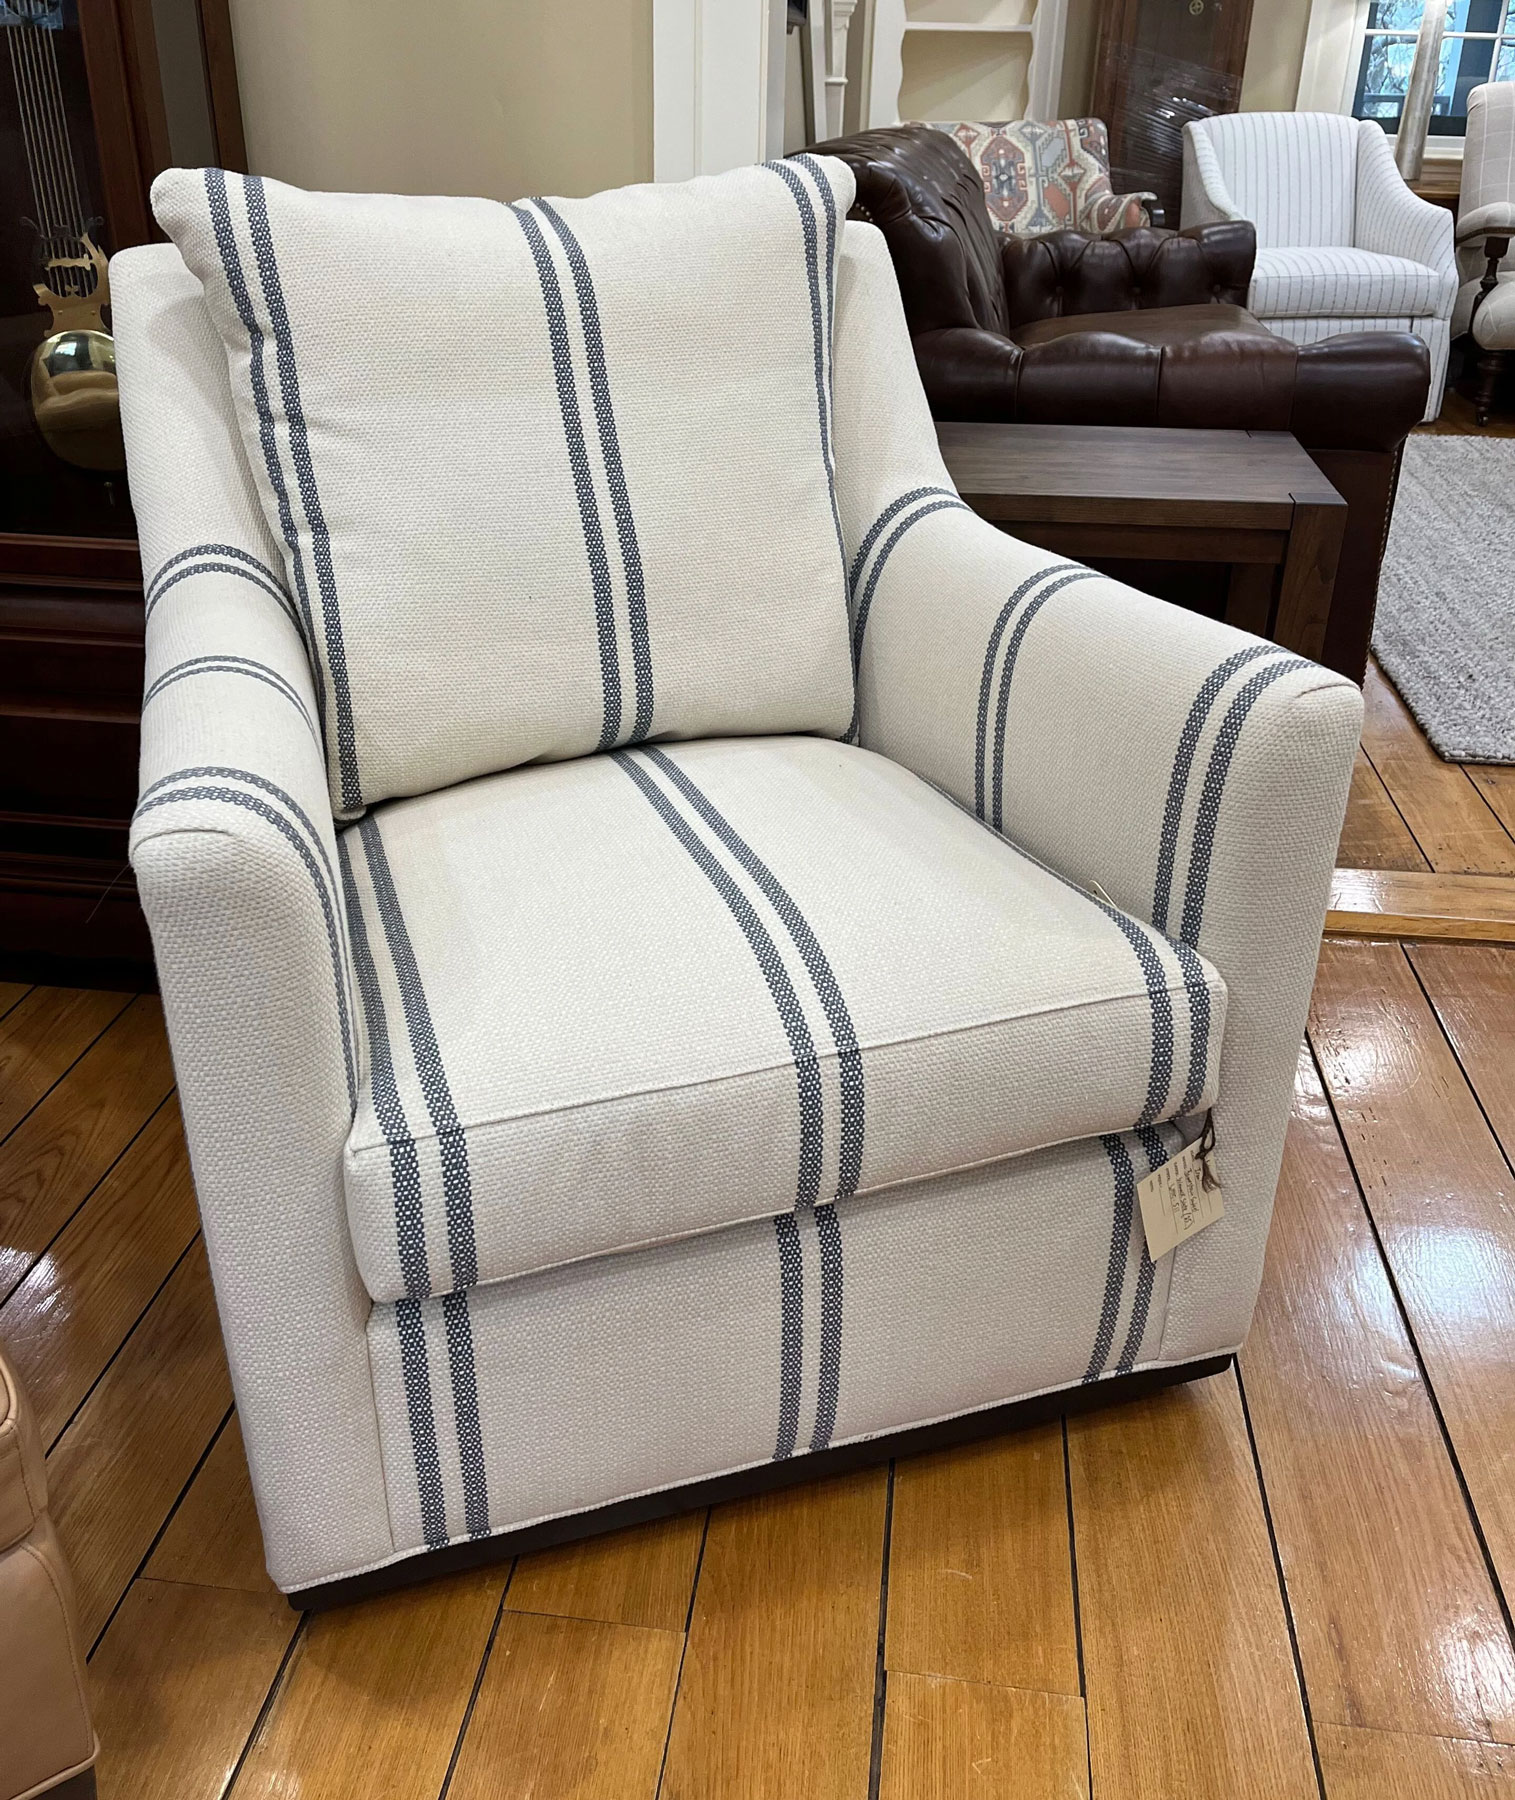 Wesley Hall 511 Jamestown Swivel Chair in Womack Slate Fabric